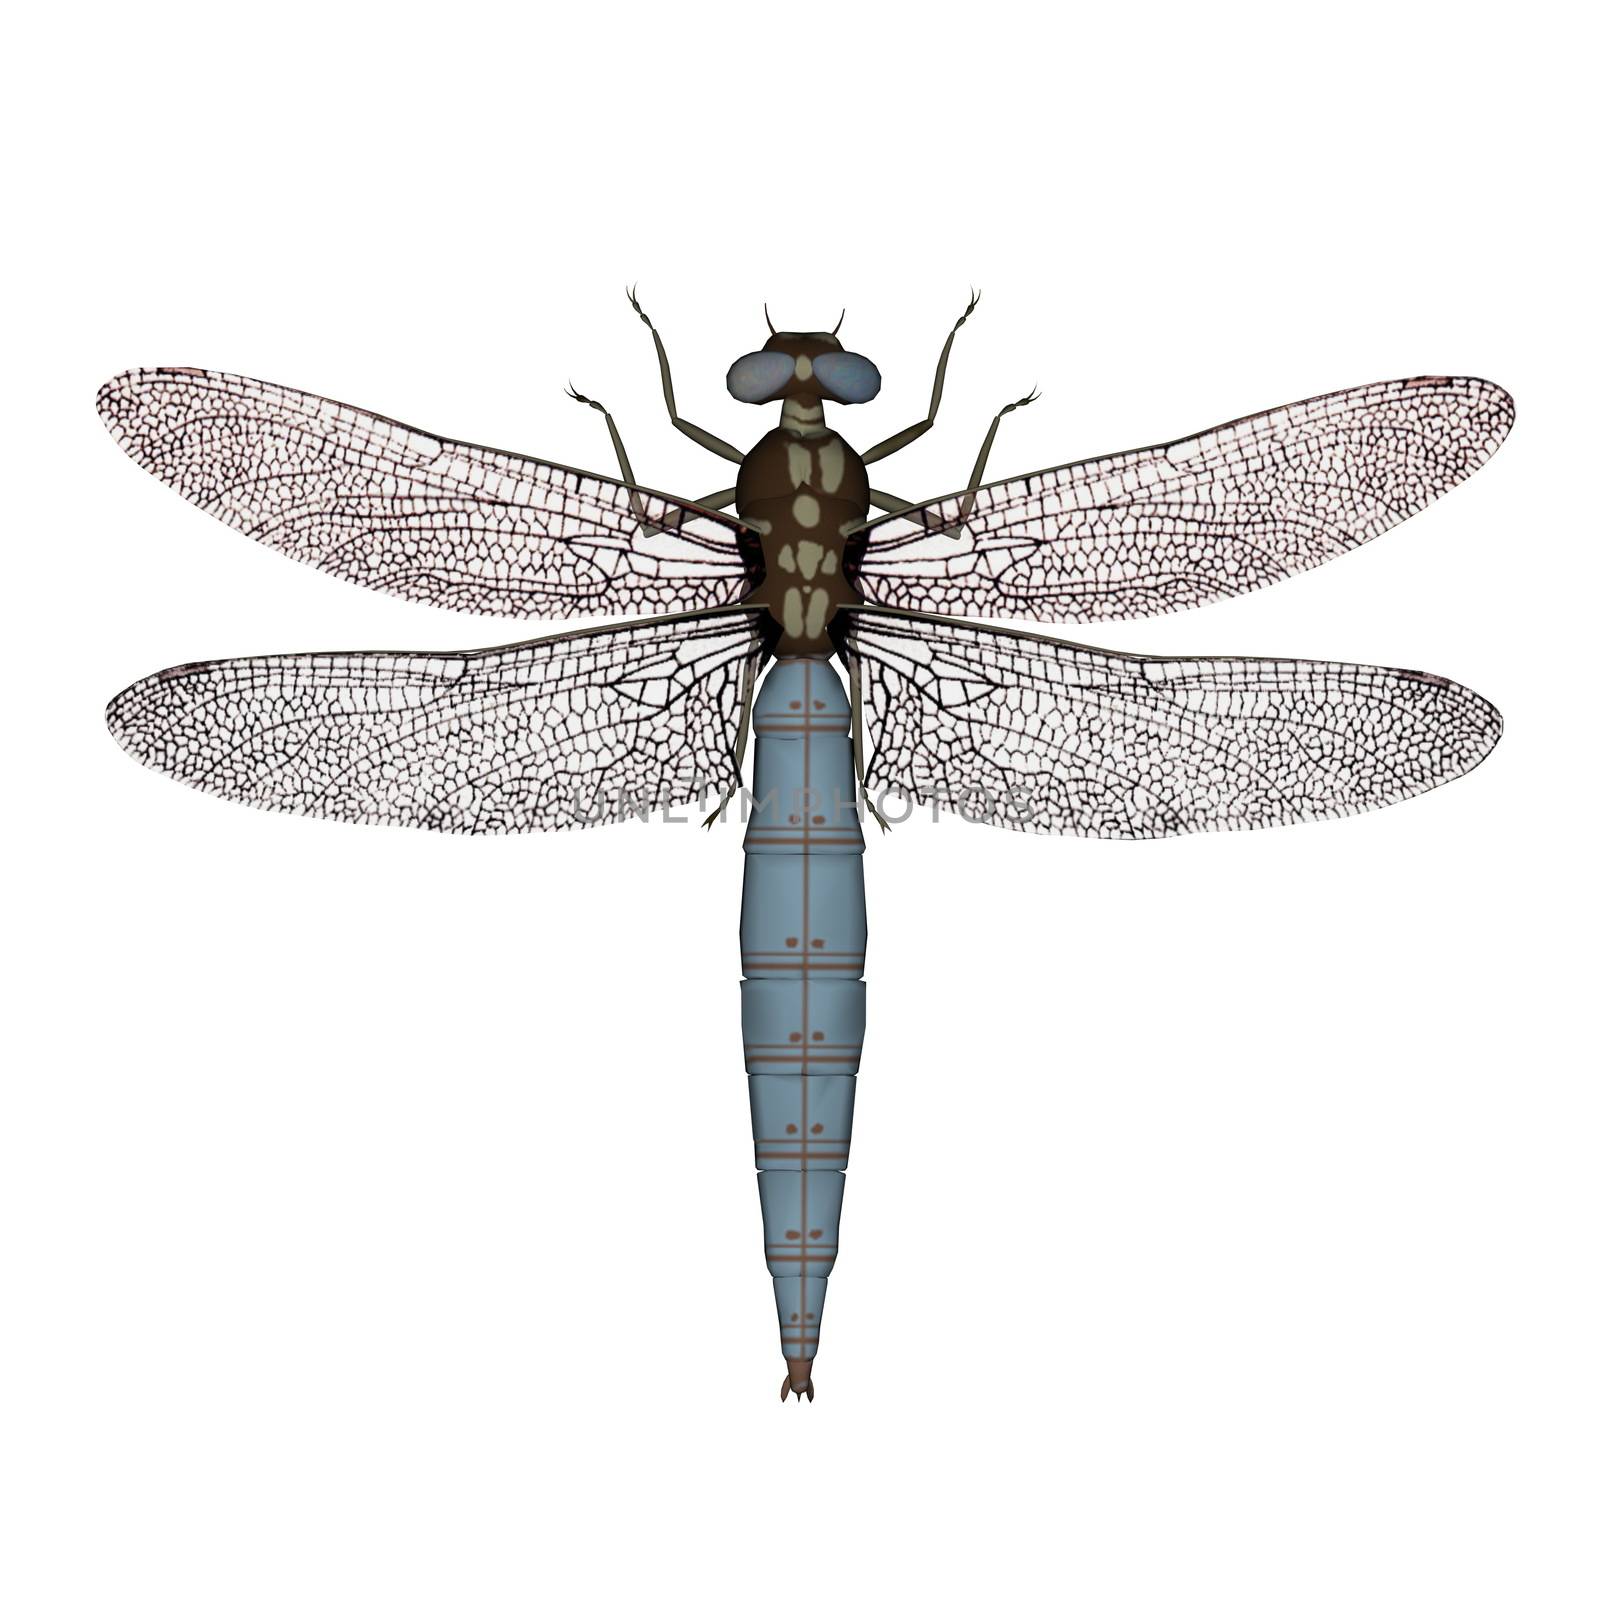 Darter dragonfly - 3D render by Elenaphotos21